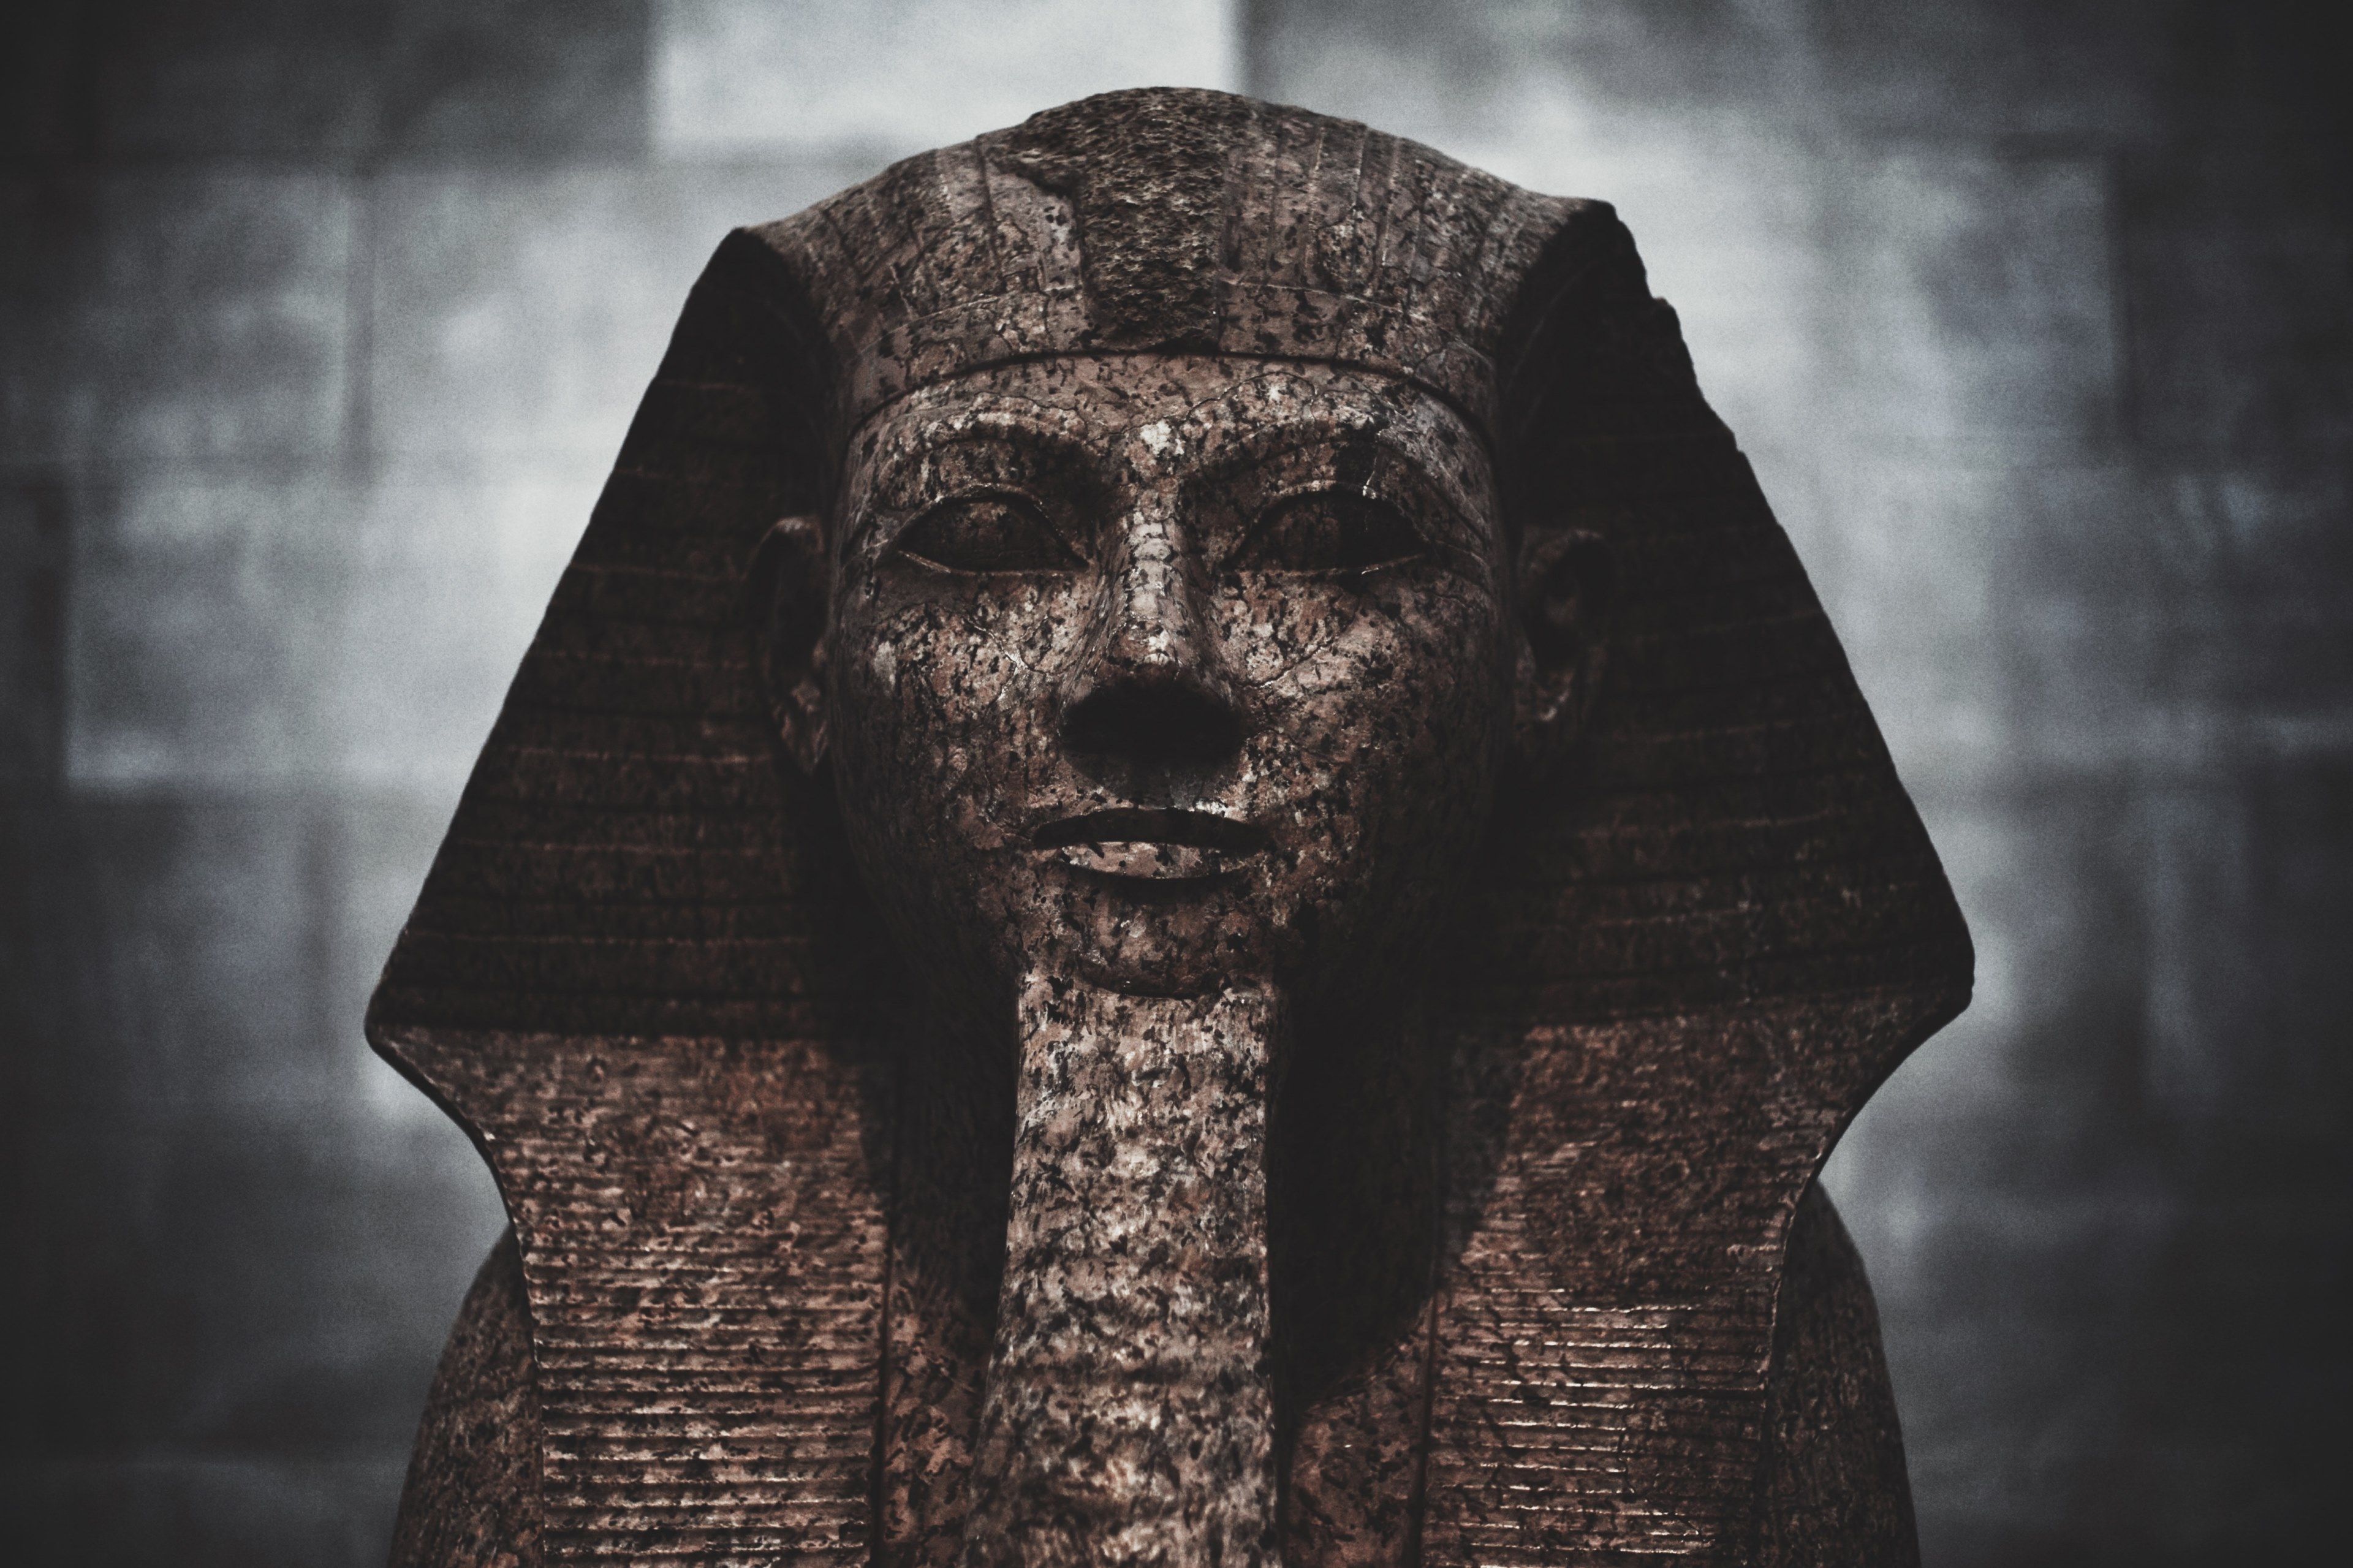 Wallpaper / macro of tutankhamun stone statue sculpture in the metropolitan museum of art, the sphinx lost in time 4k wallpaper